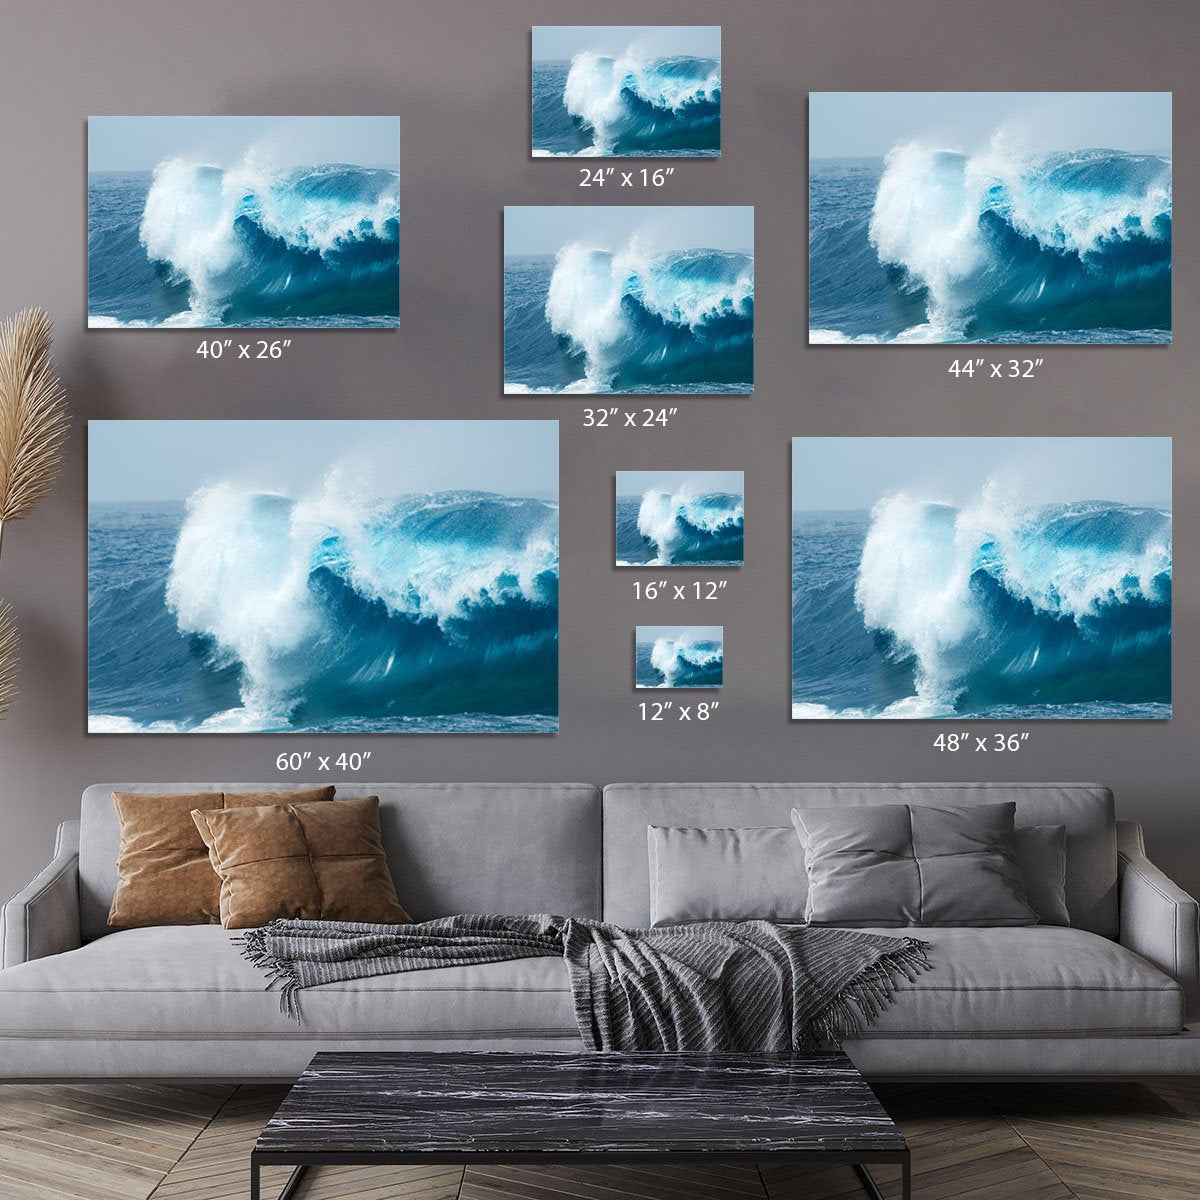 Ocean waves breaking natural Canvas Print or Poster